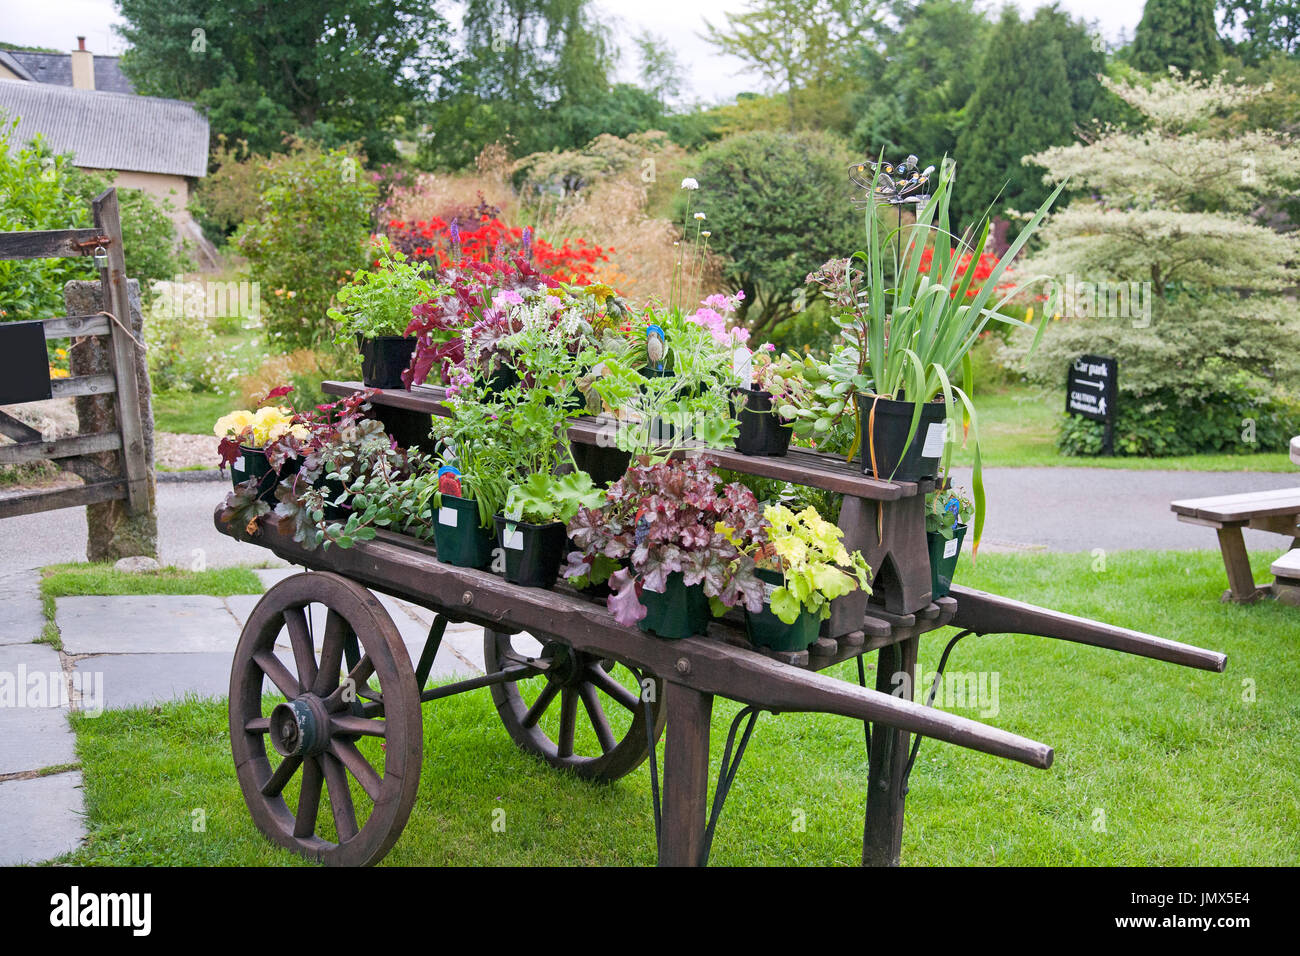 Plants displayed on a wheelbarrow for sale Stock Photo